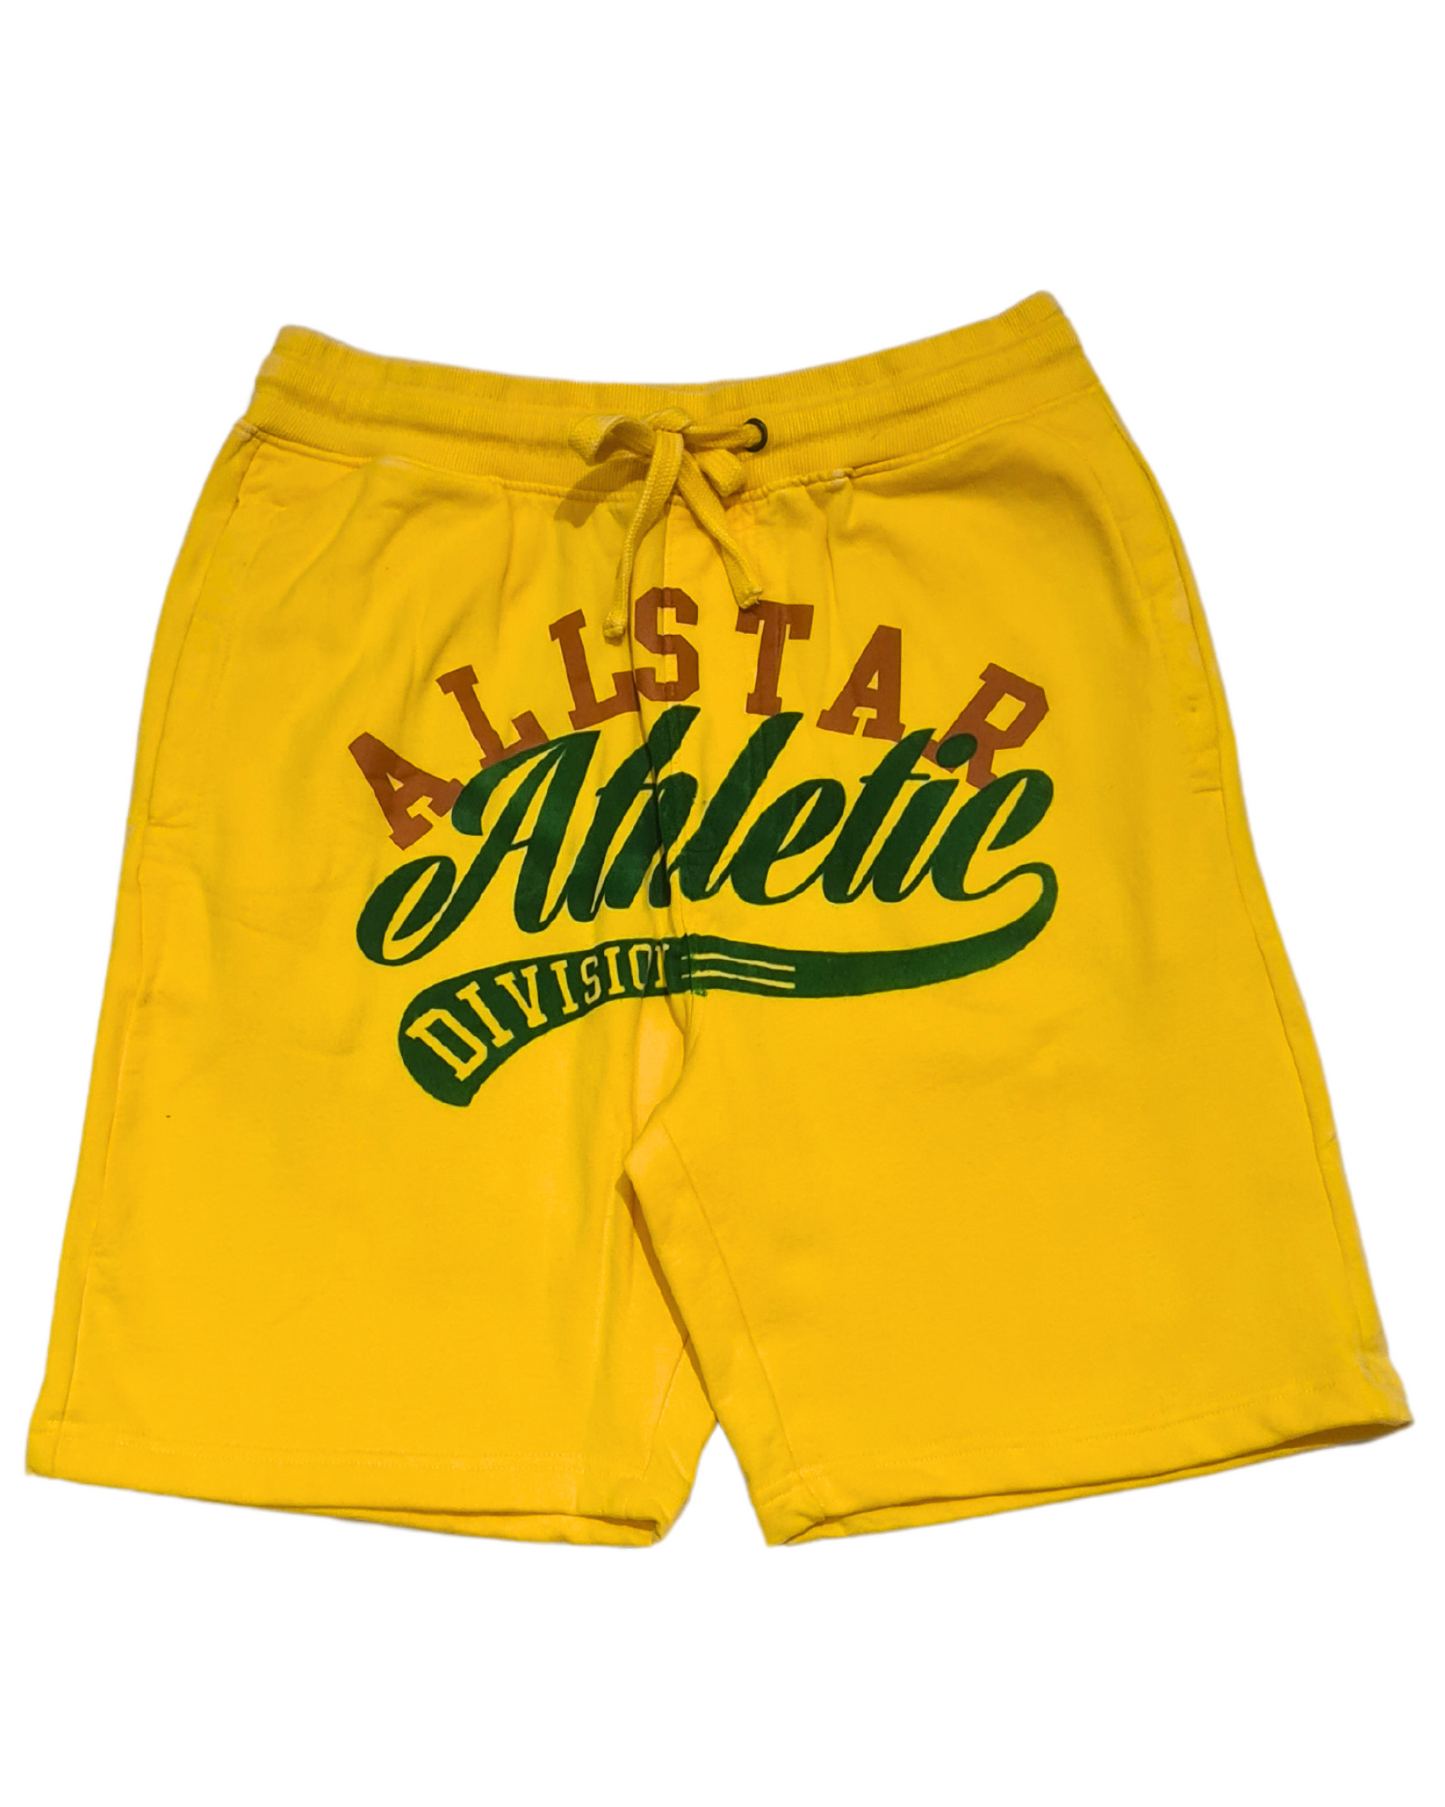 Athletic Division Shorts